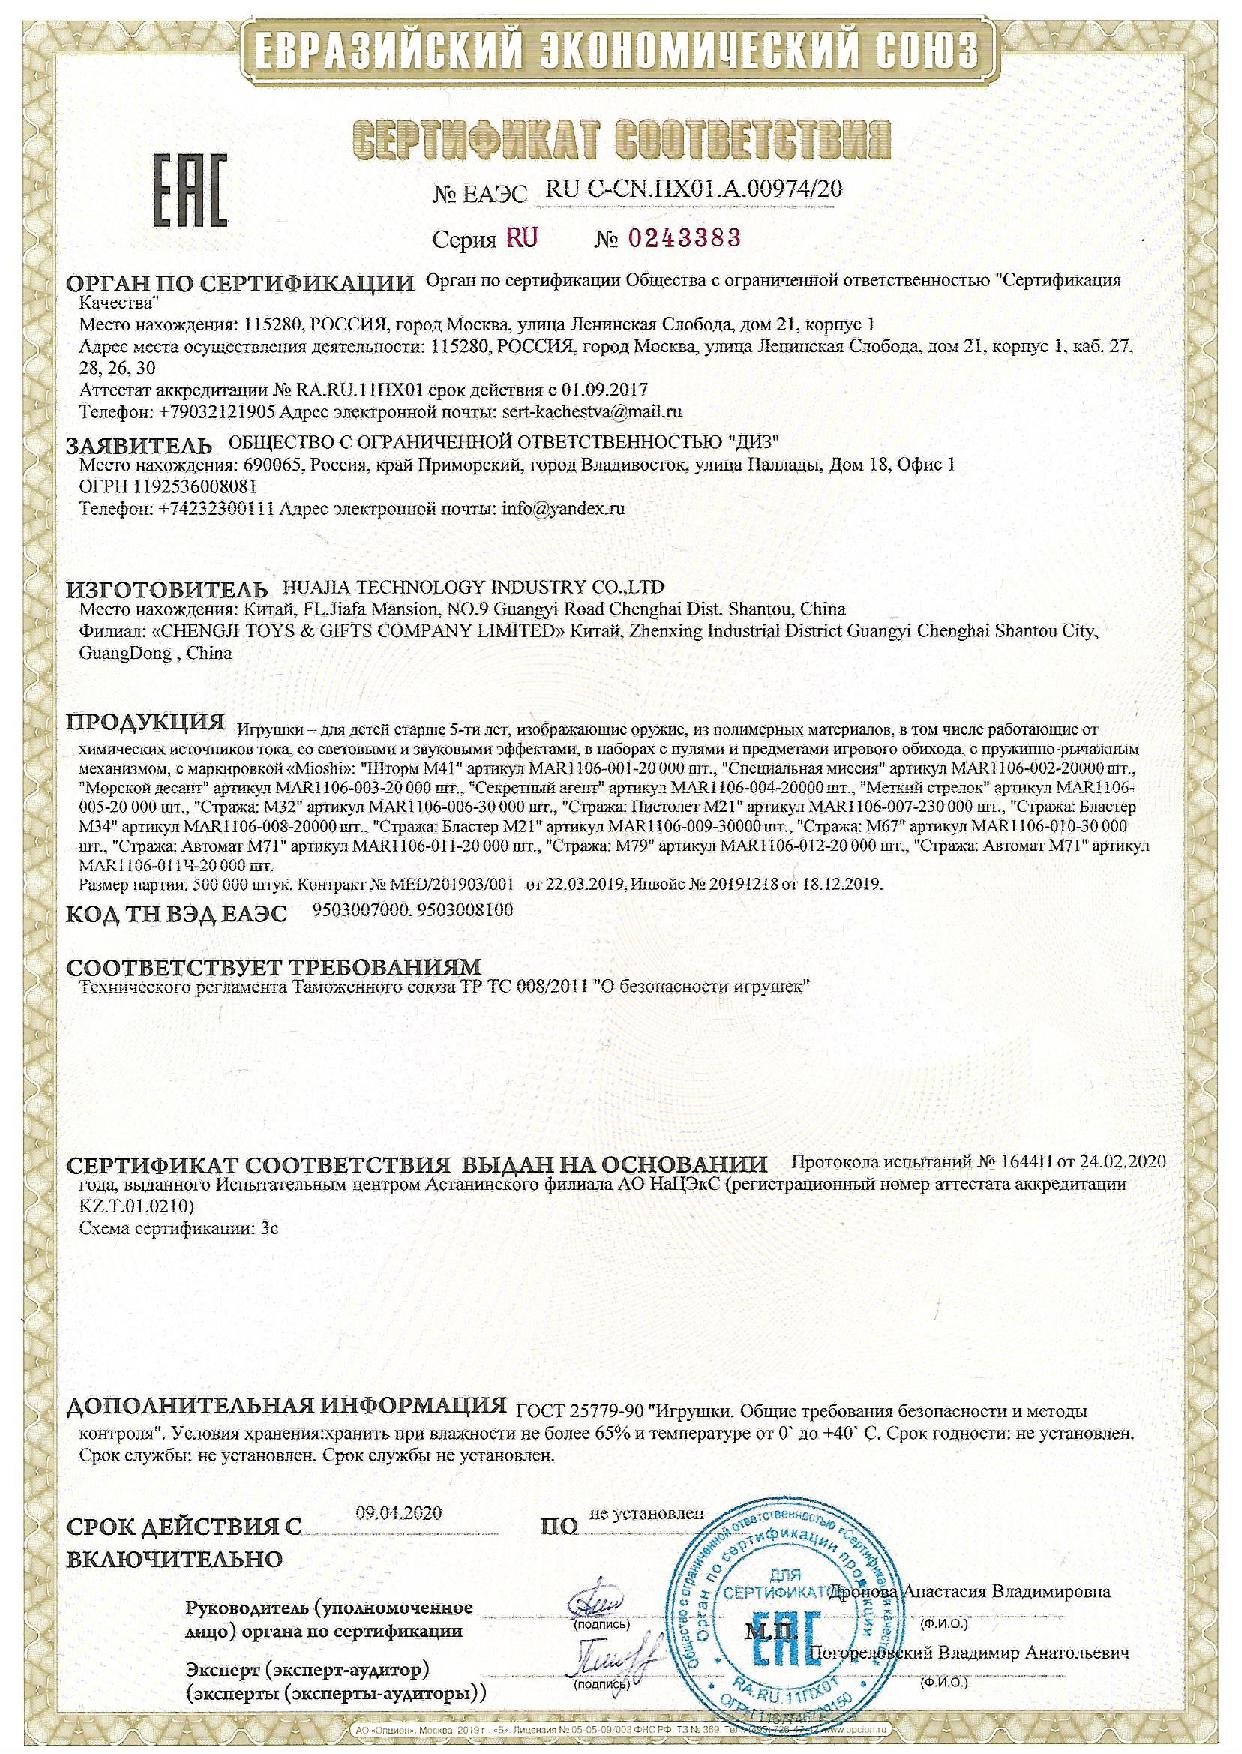 ЕАЭС RU C-CN.ПХ01.А.00974 20: /images/certificates/EAES-RU-C-CN.PH01.A.00974-20.jpg